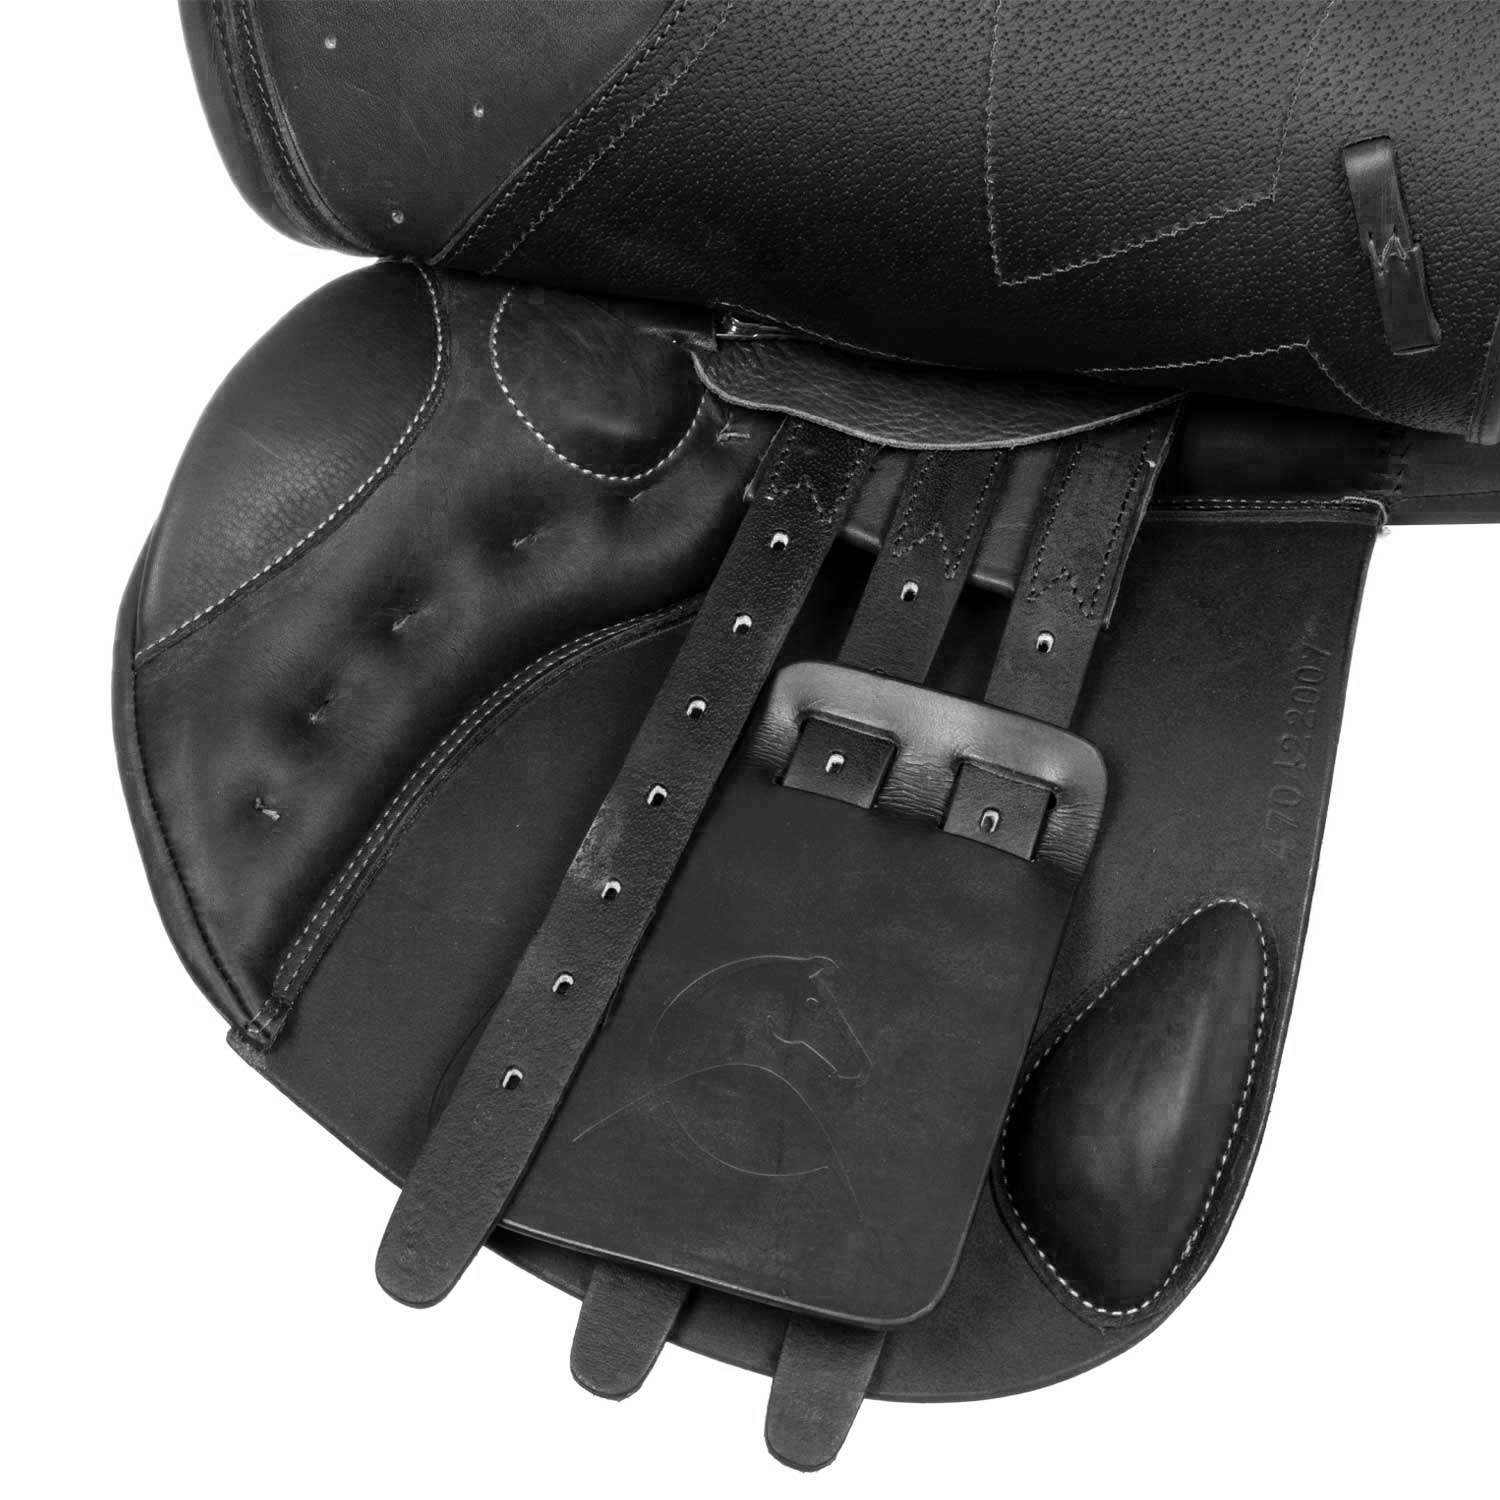 Springsattel Modigliani jumping saddle wool panels - Reitstiefel Kandel - Dein Reitshop